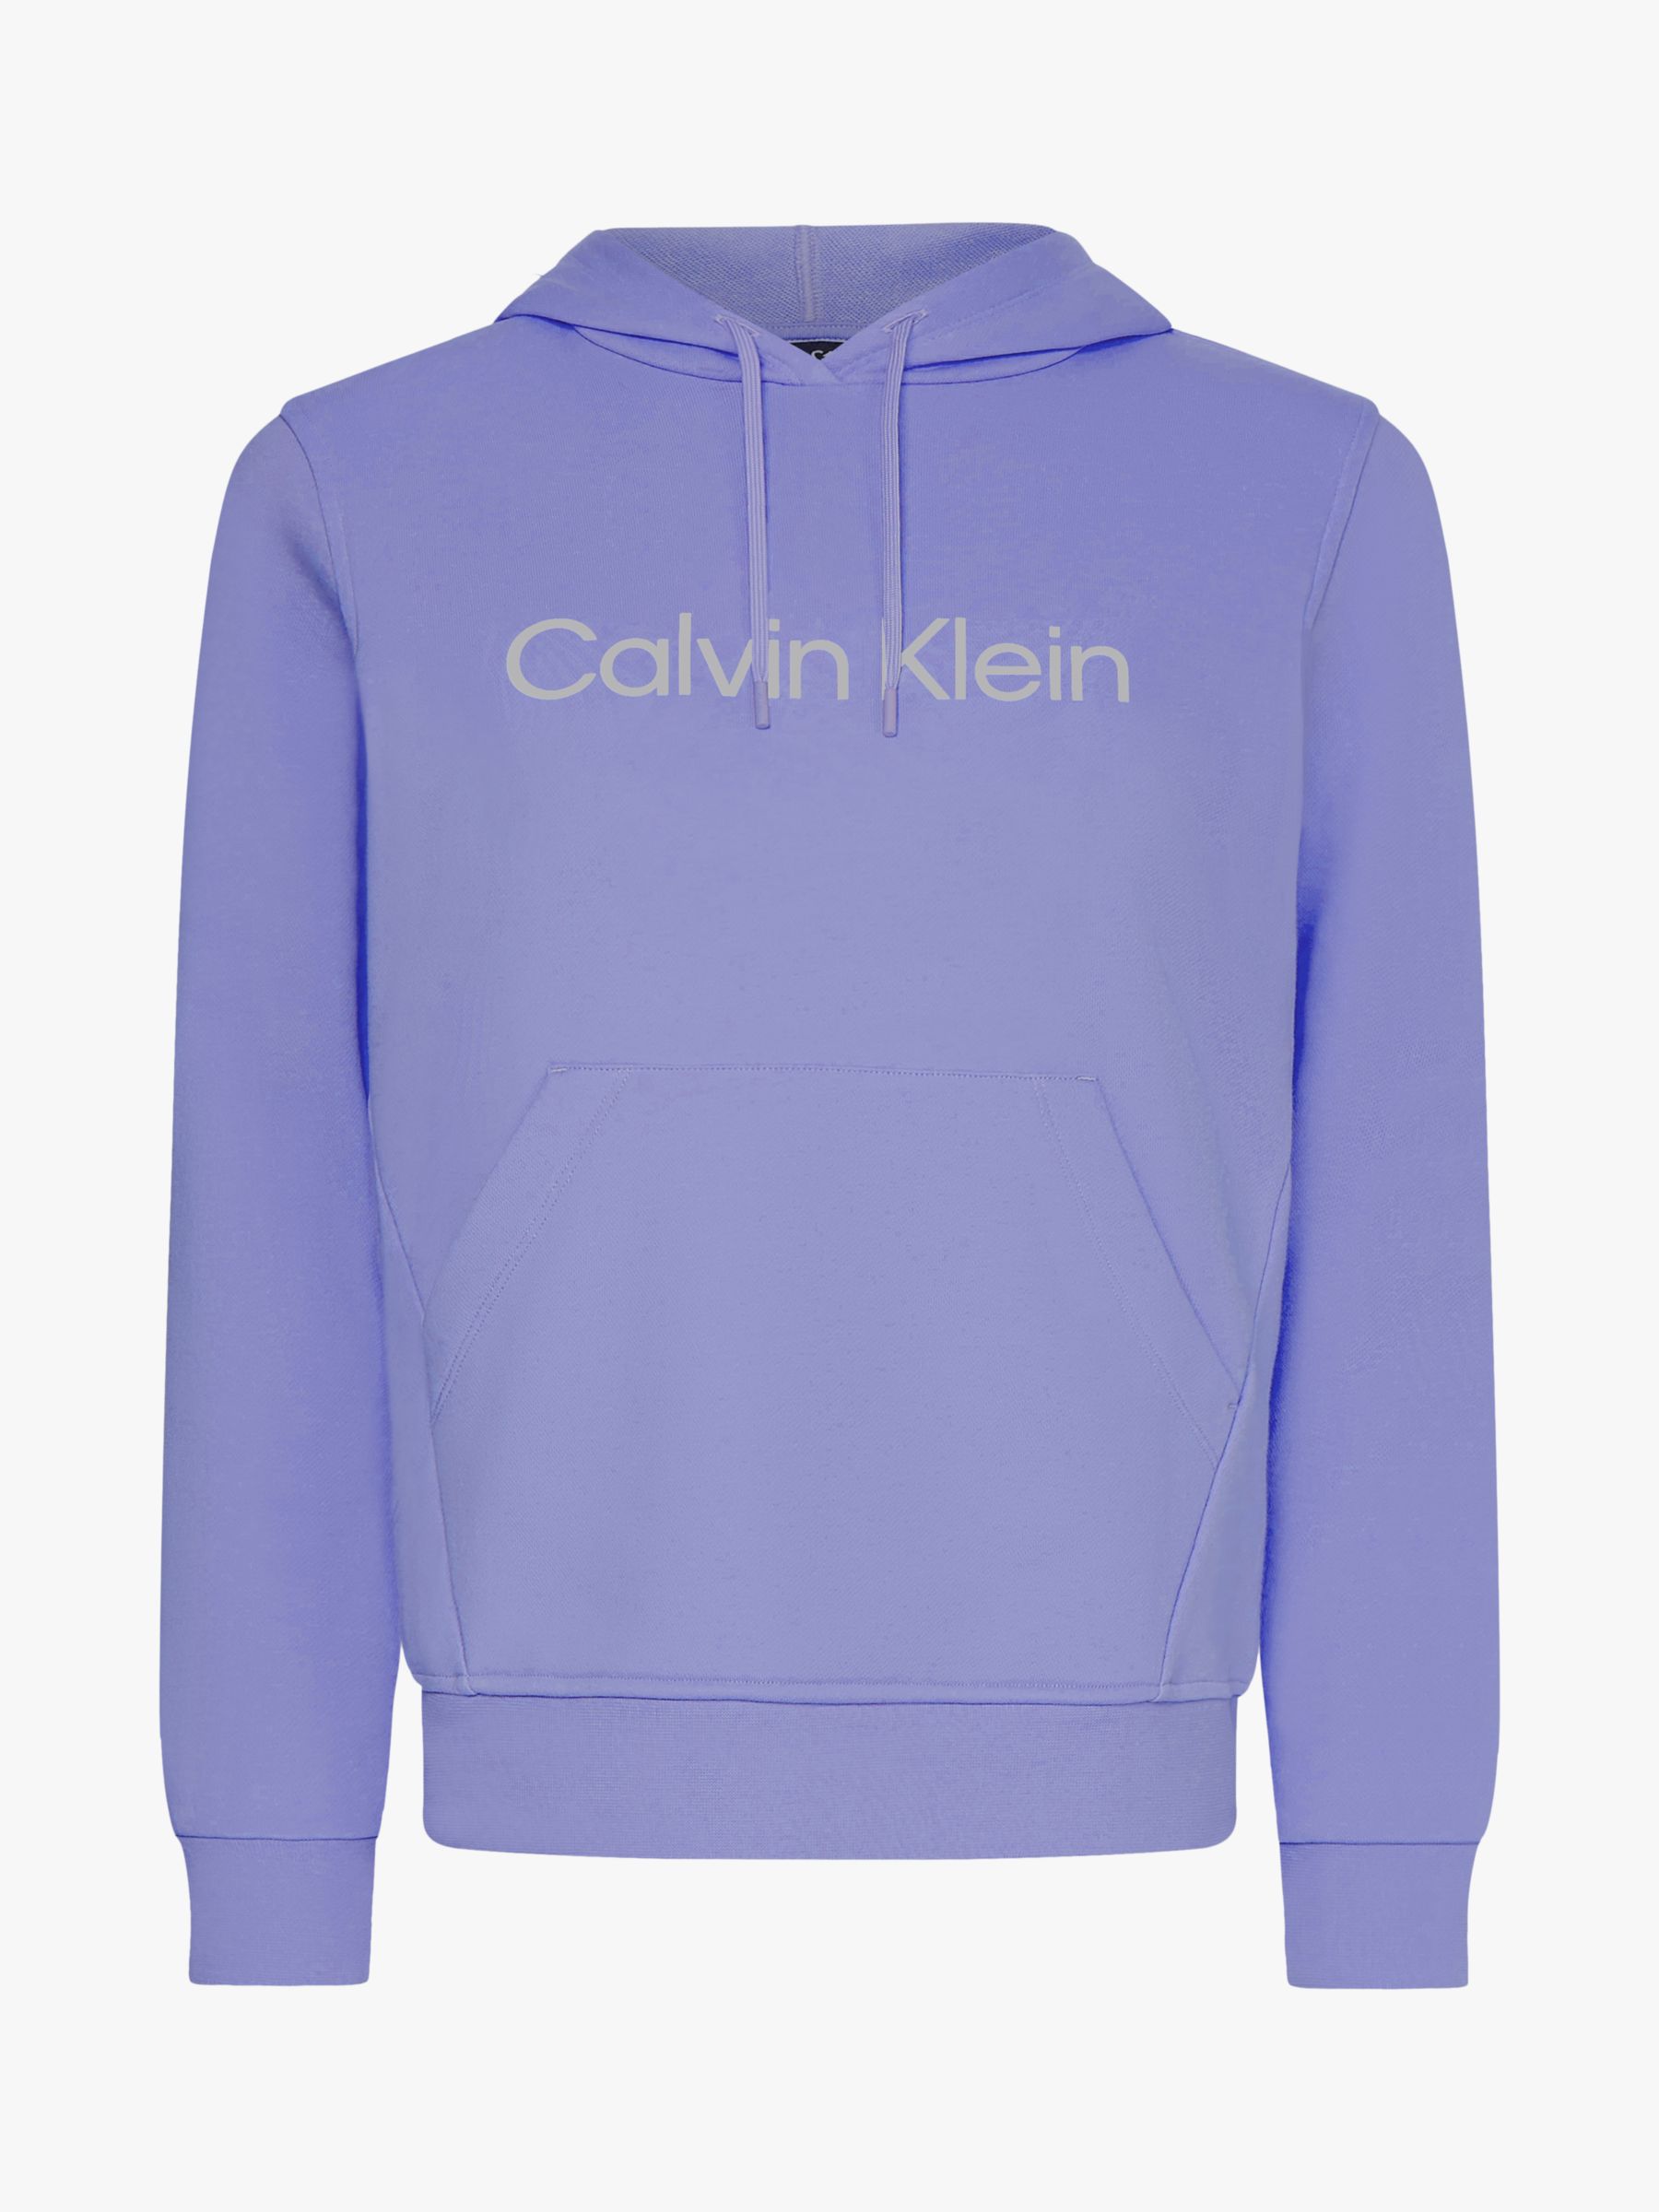 Calvin Klein Essentials Script Logo Hoodie, Jacaranda